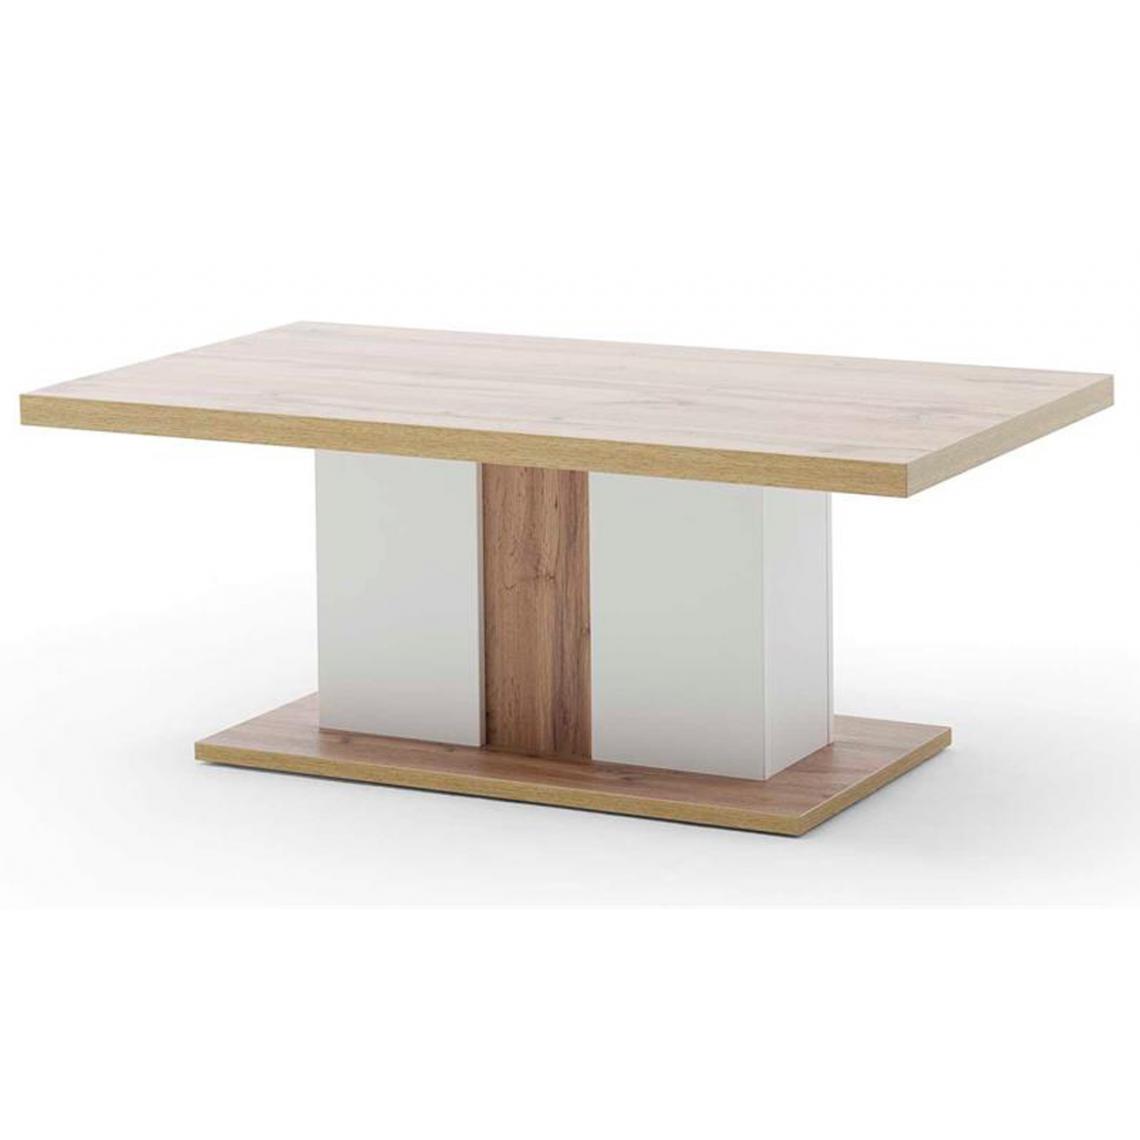 Pegane - Table basse simple en bois coloris blanc/chêne wotan - L.115 x H.45 x P.65 cm - Tables basses